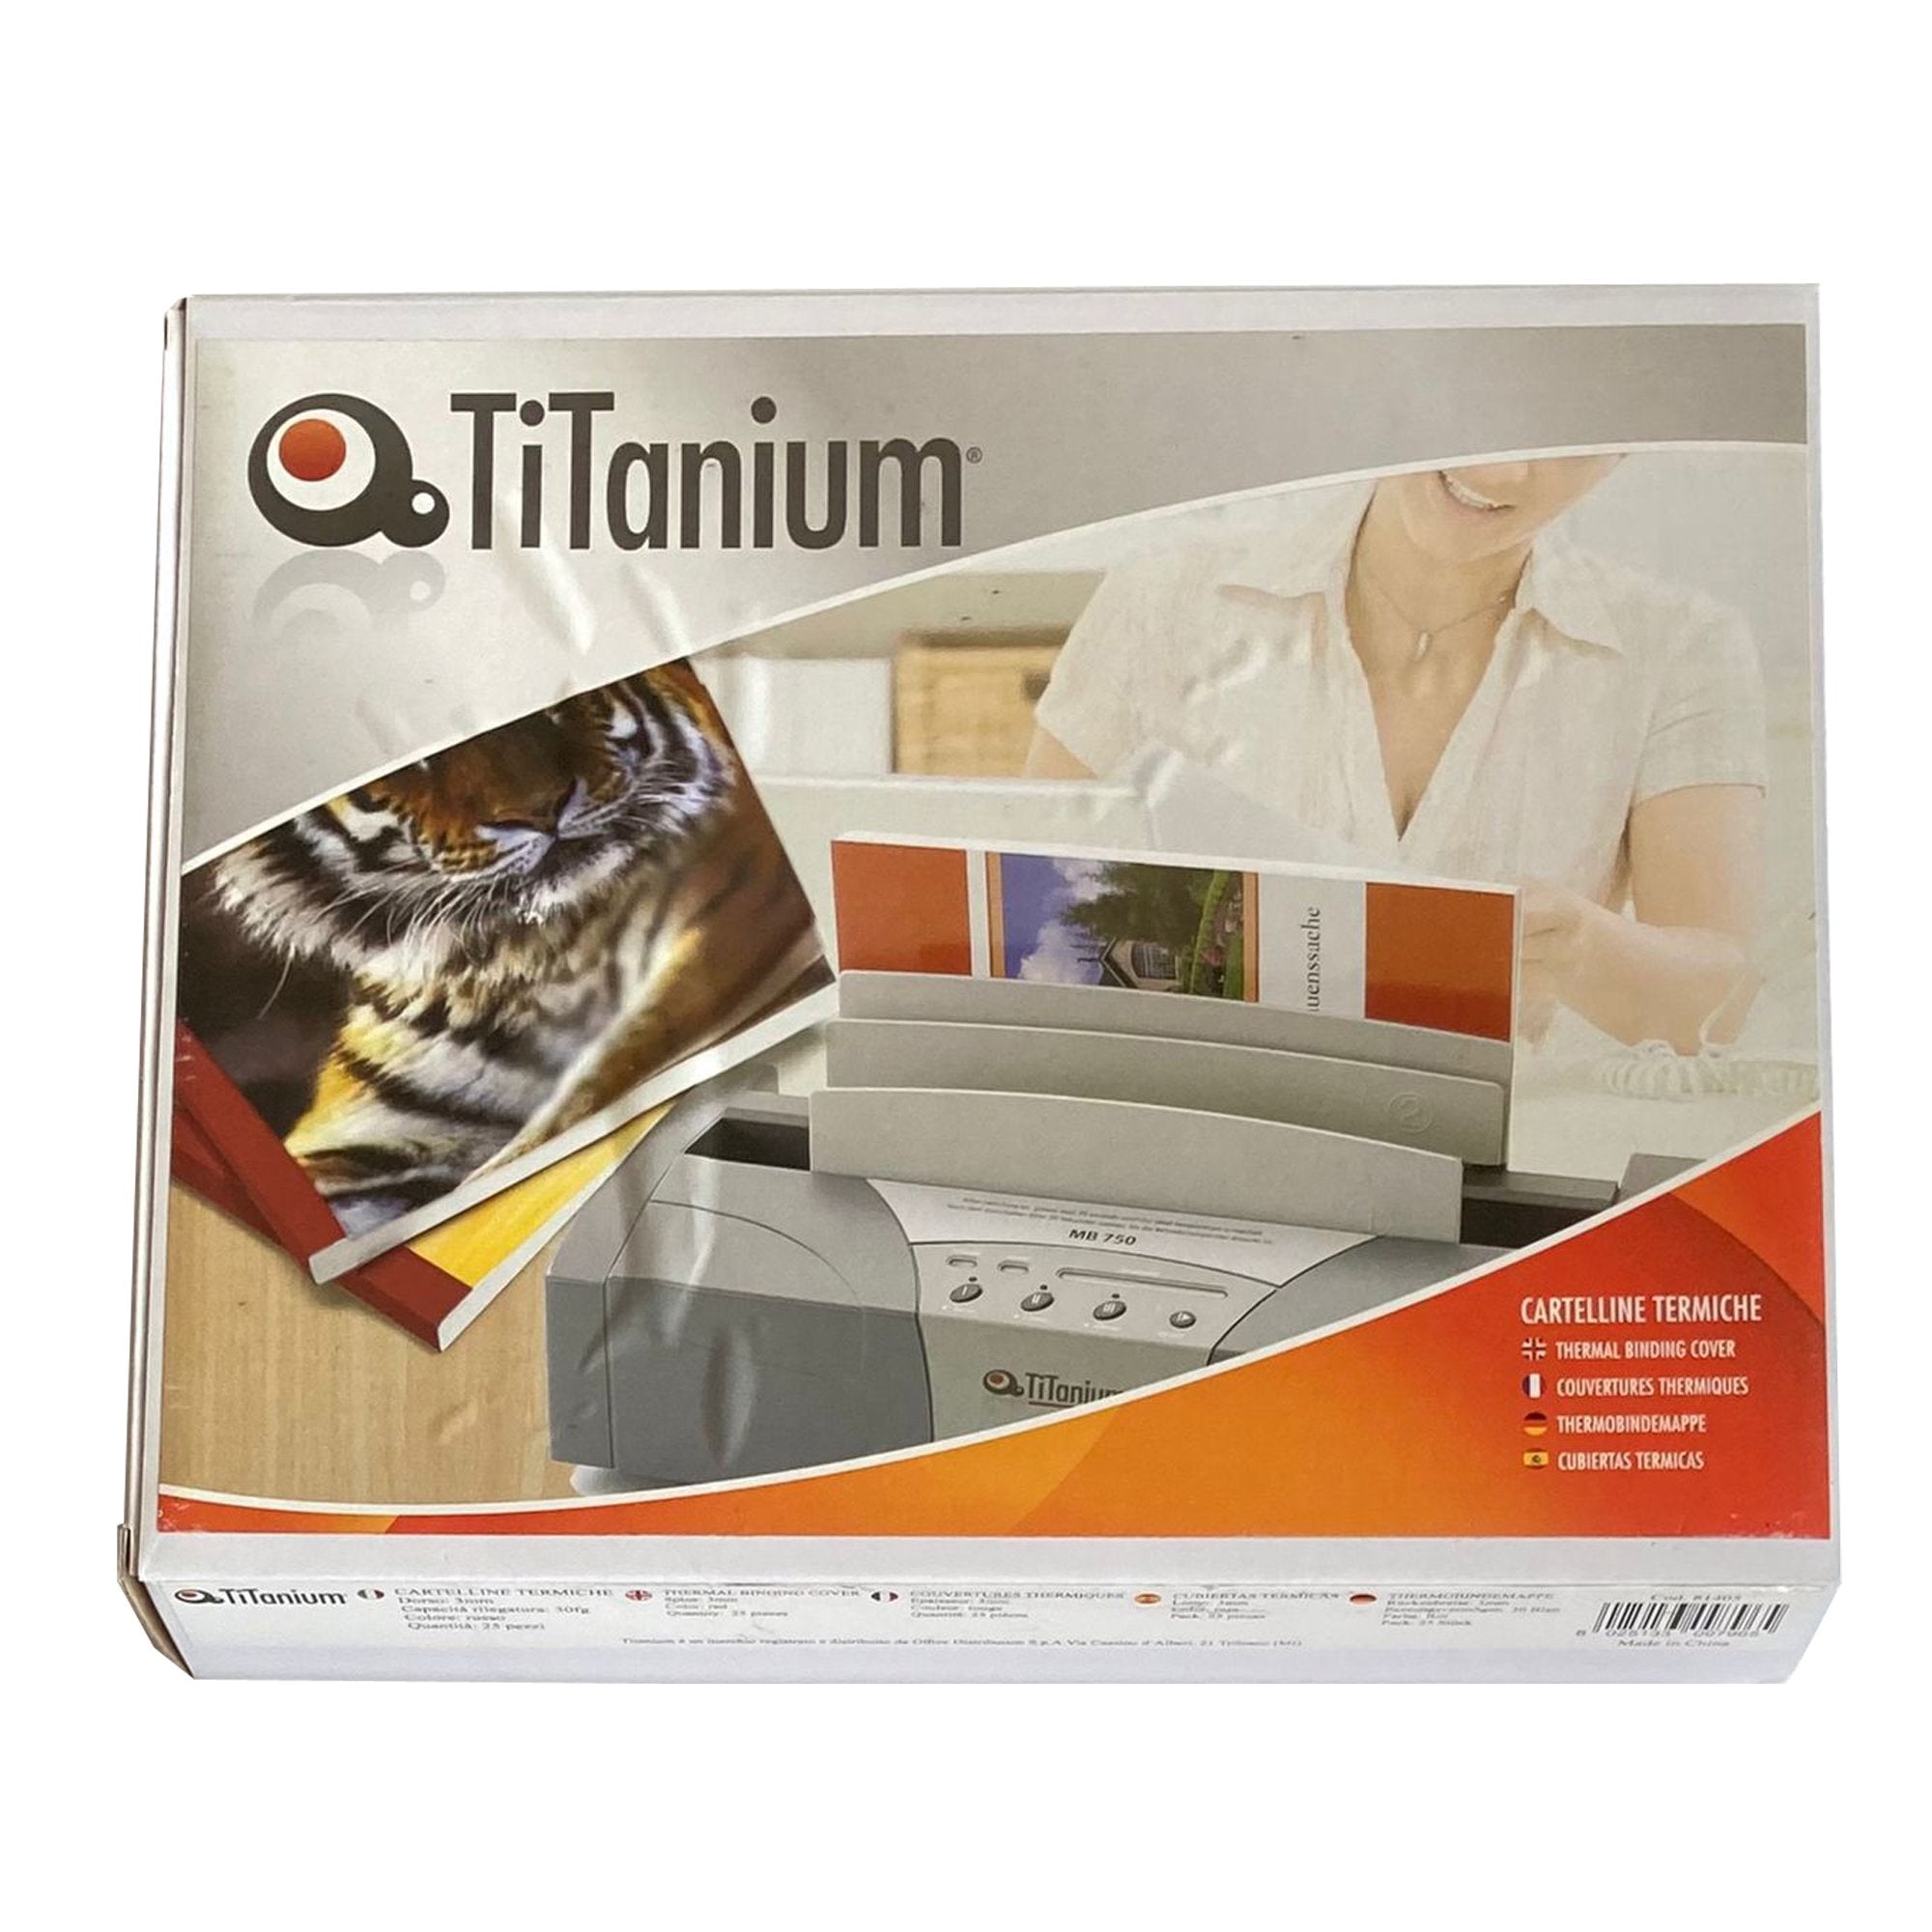 titanium-25-cartelline-termiche-6mm-rosso-grain